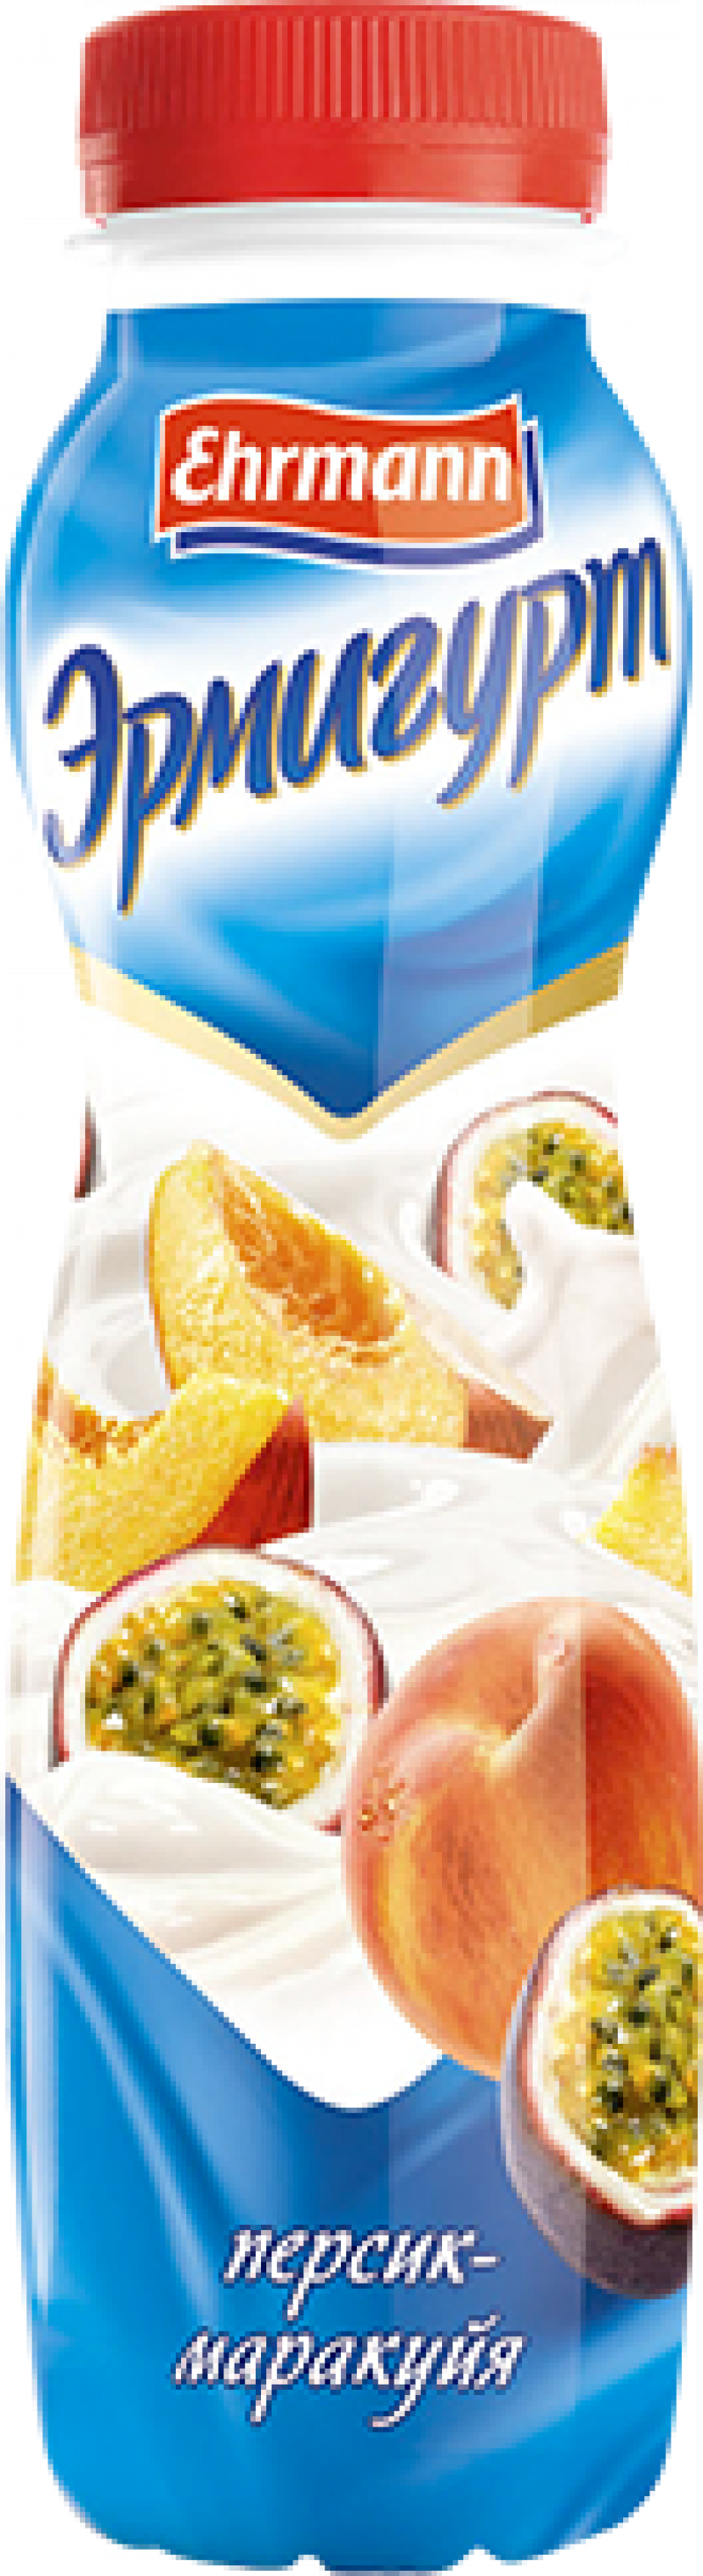 Йогурт ТМ Эрмигурт питьевой Персик-Маракуйя 1,2% 290г